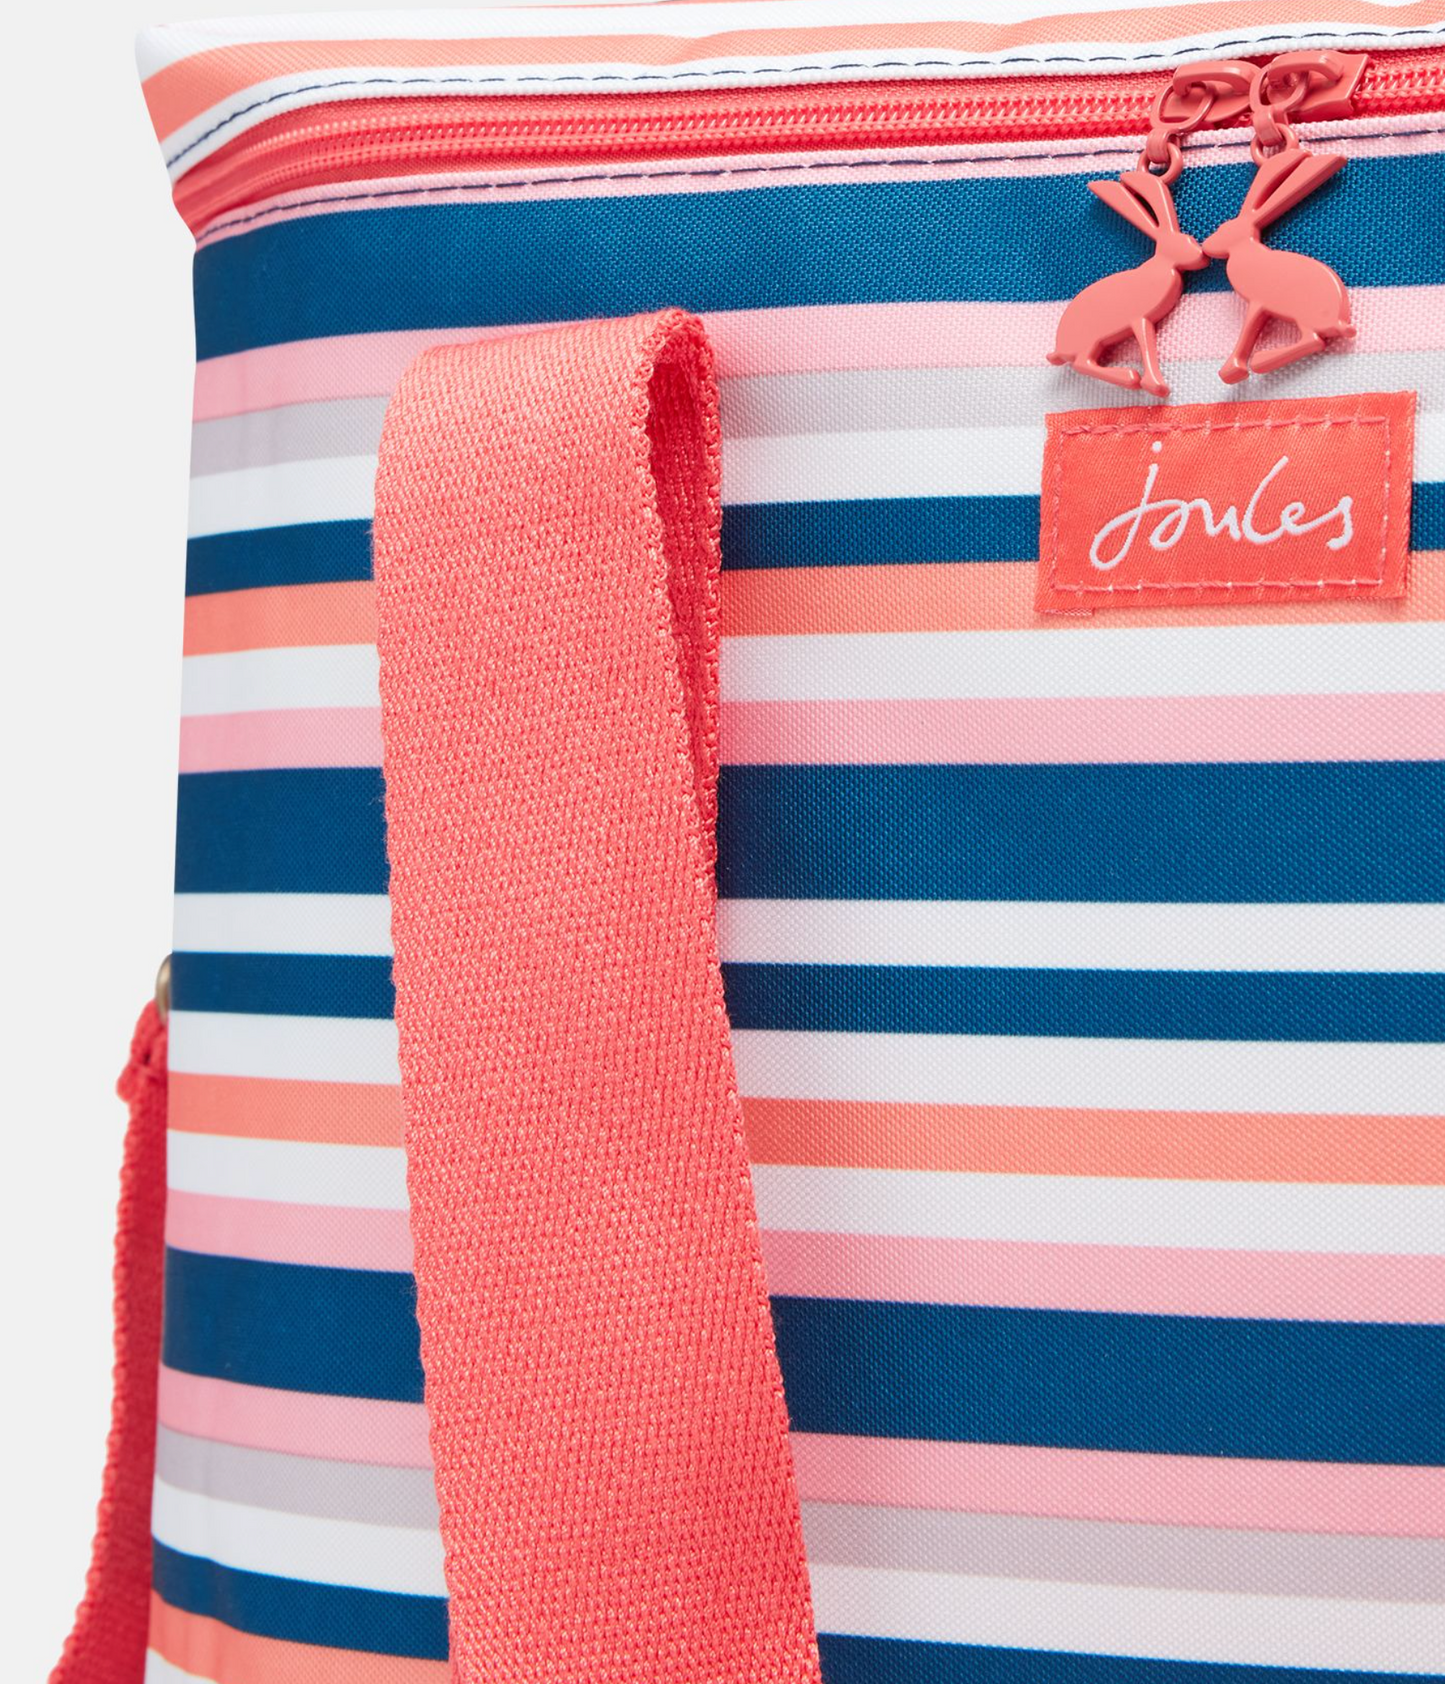 Joules Large Picnic Cooler Bag, Stripes